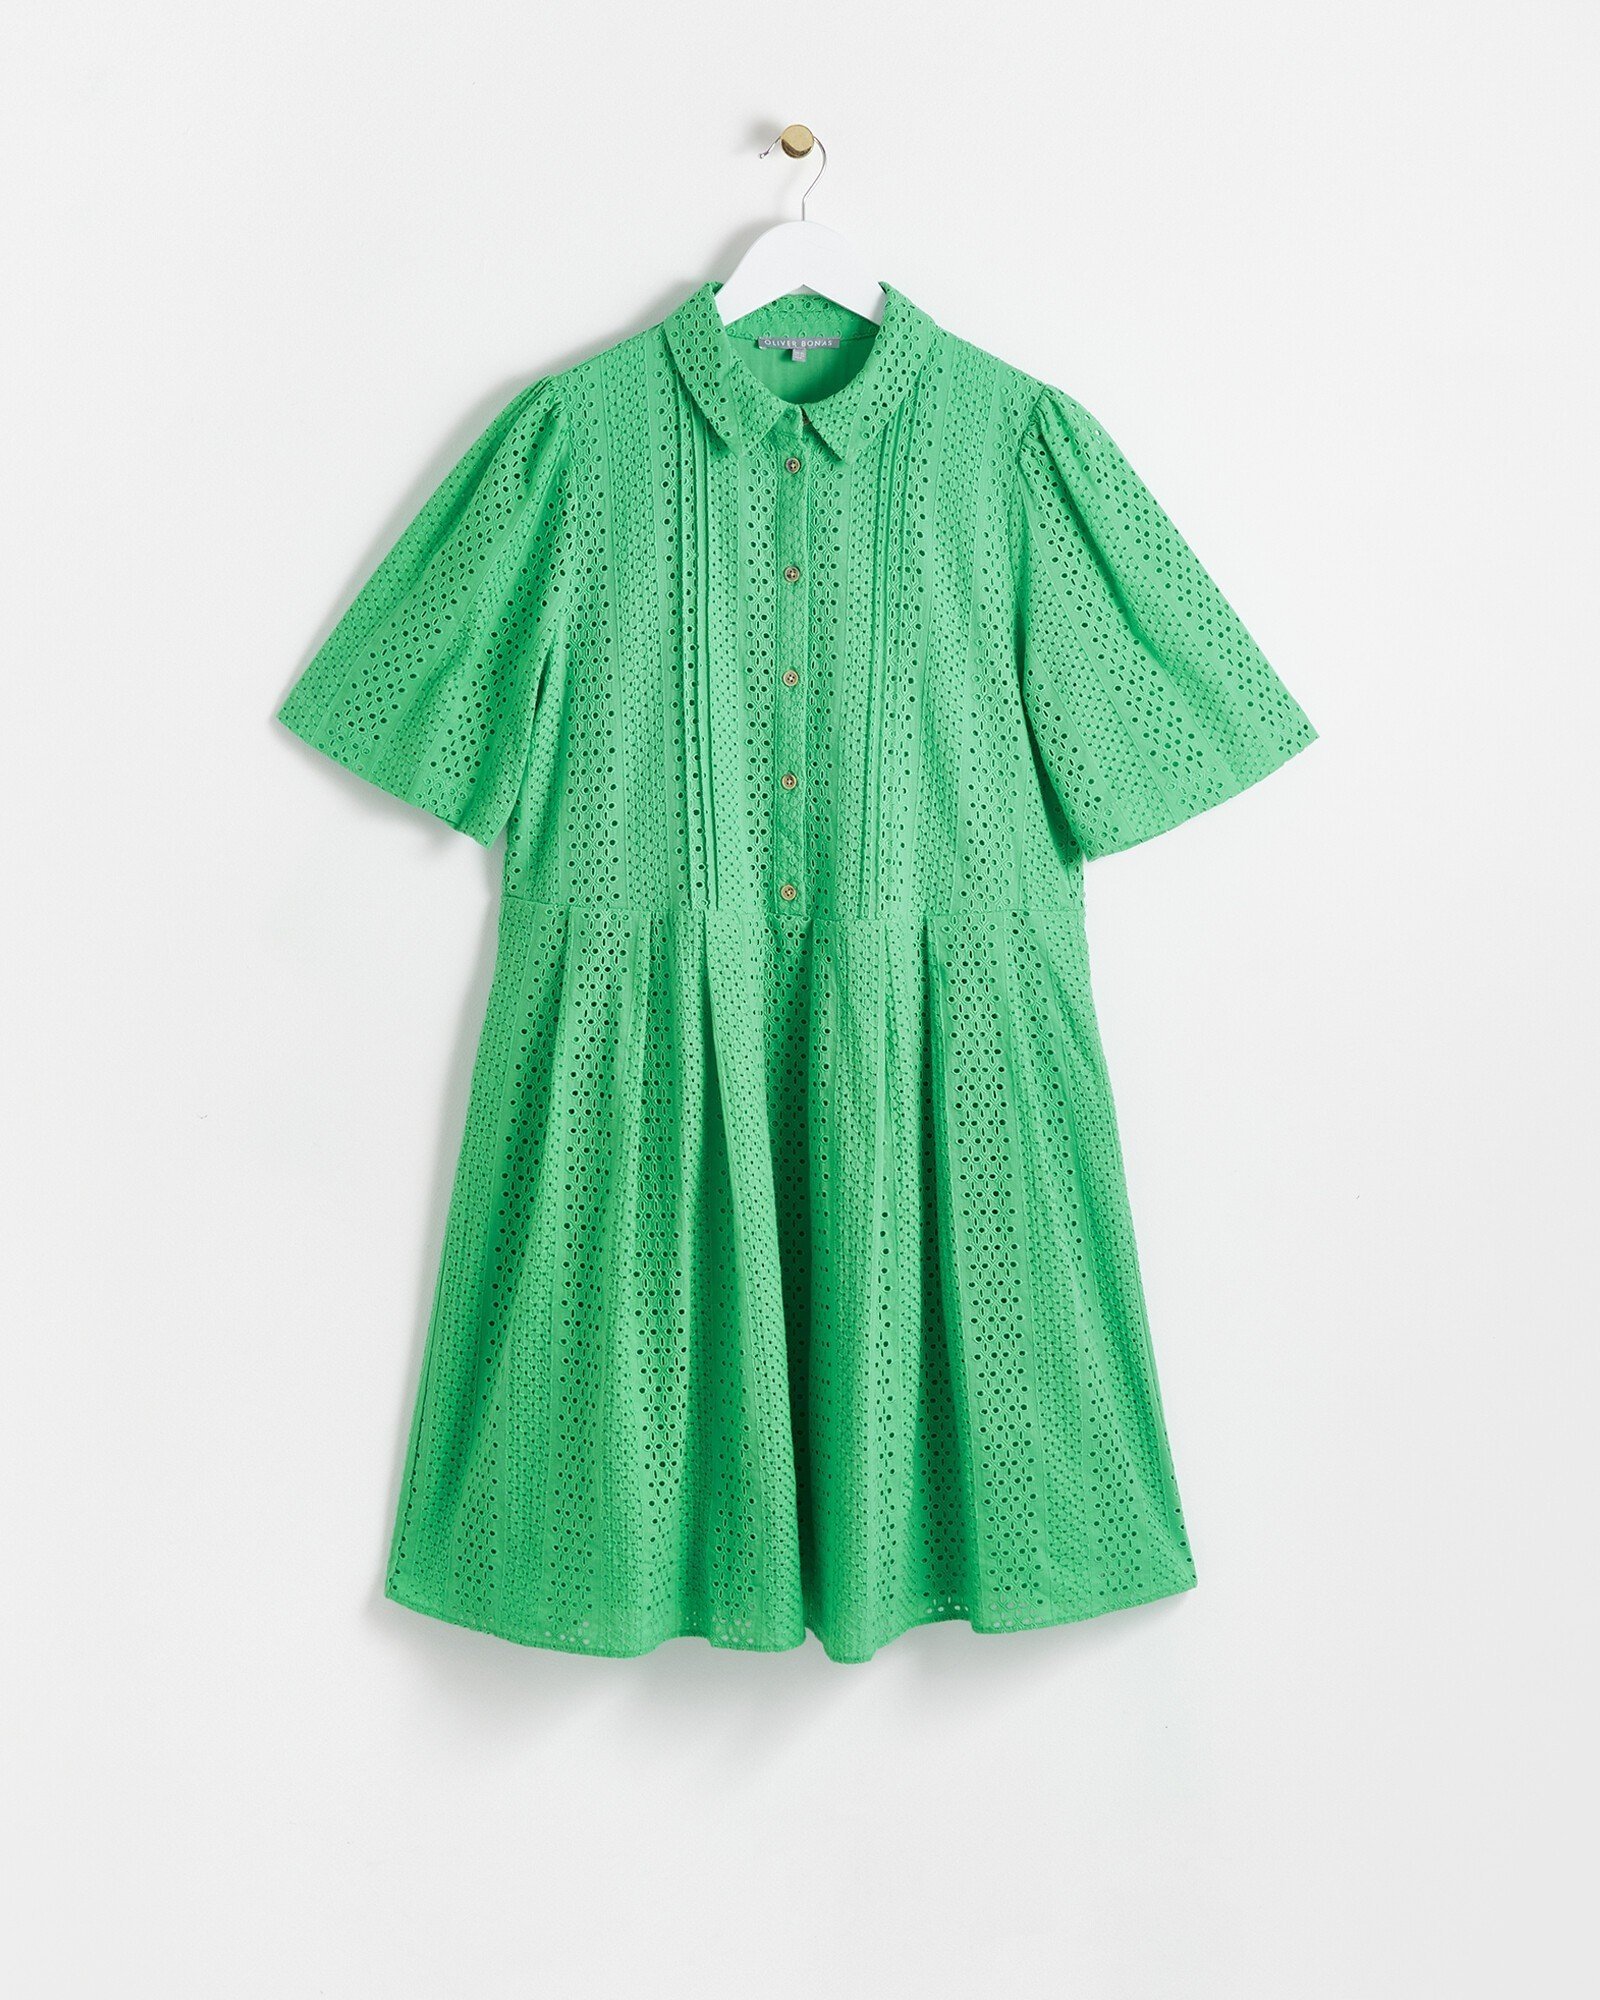 10.OLIVER BONAS Broderie Green Mini Shirt Dress €84, 